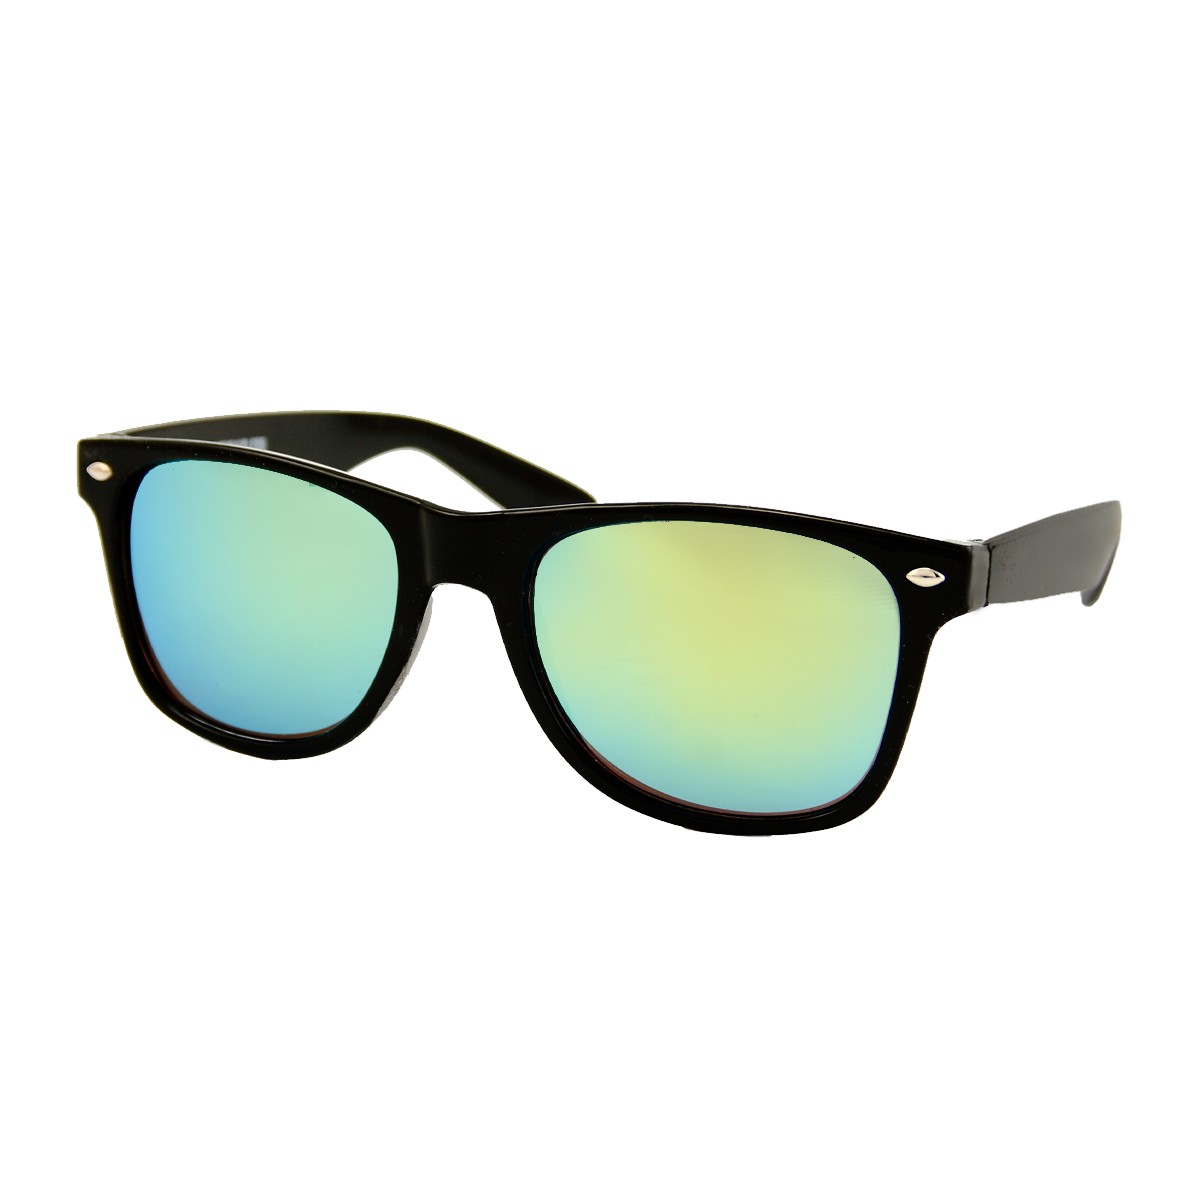 Wayfarer Zonnebril Zwart - Geel Groen Spiegelglas